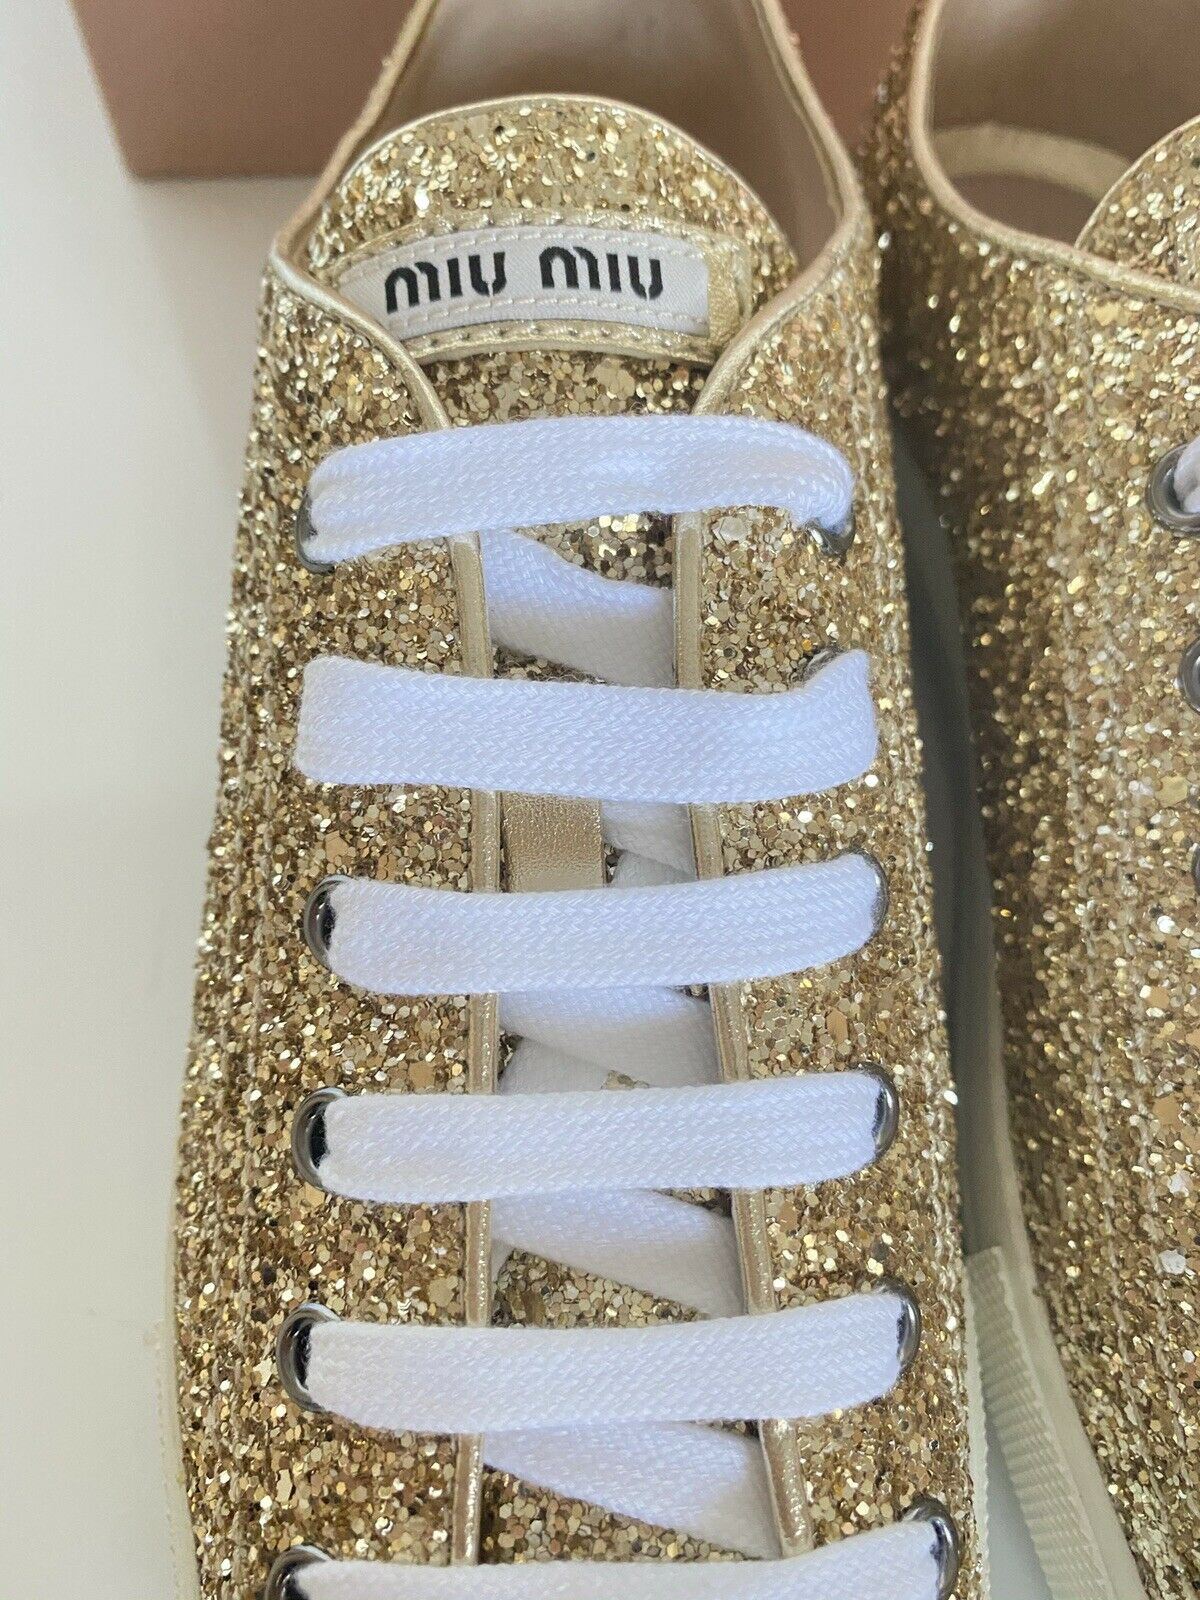 NIB Miu Miu Gold Glitter Damen Leder Metall Cap Toe Sneakers (40 Eu) 5E8998 